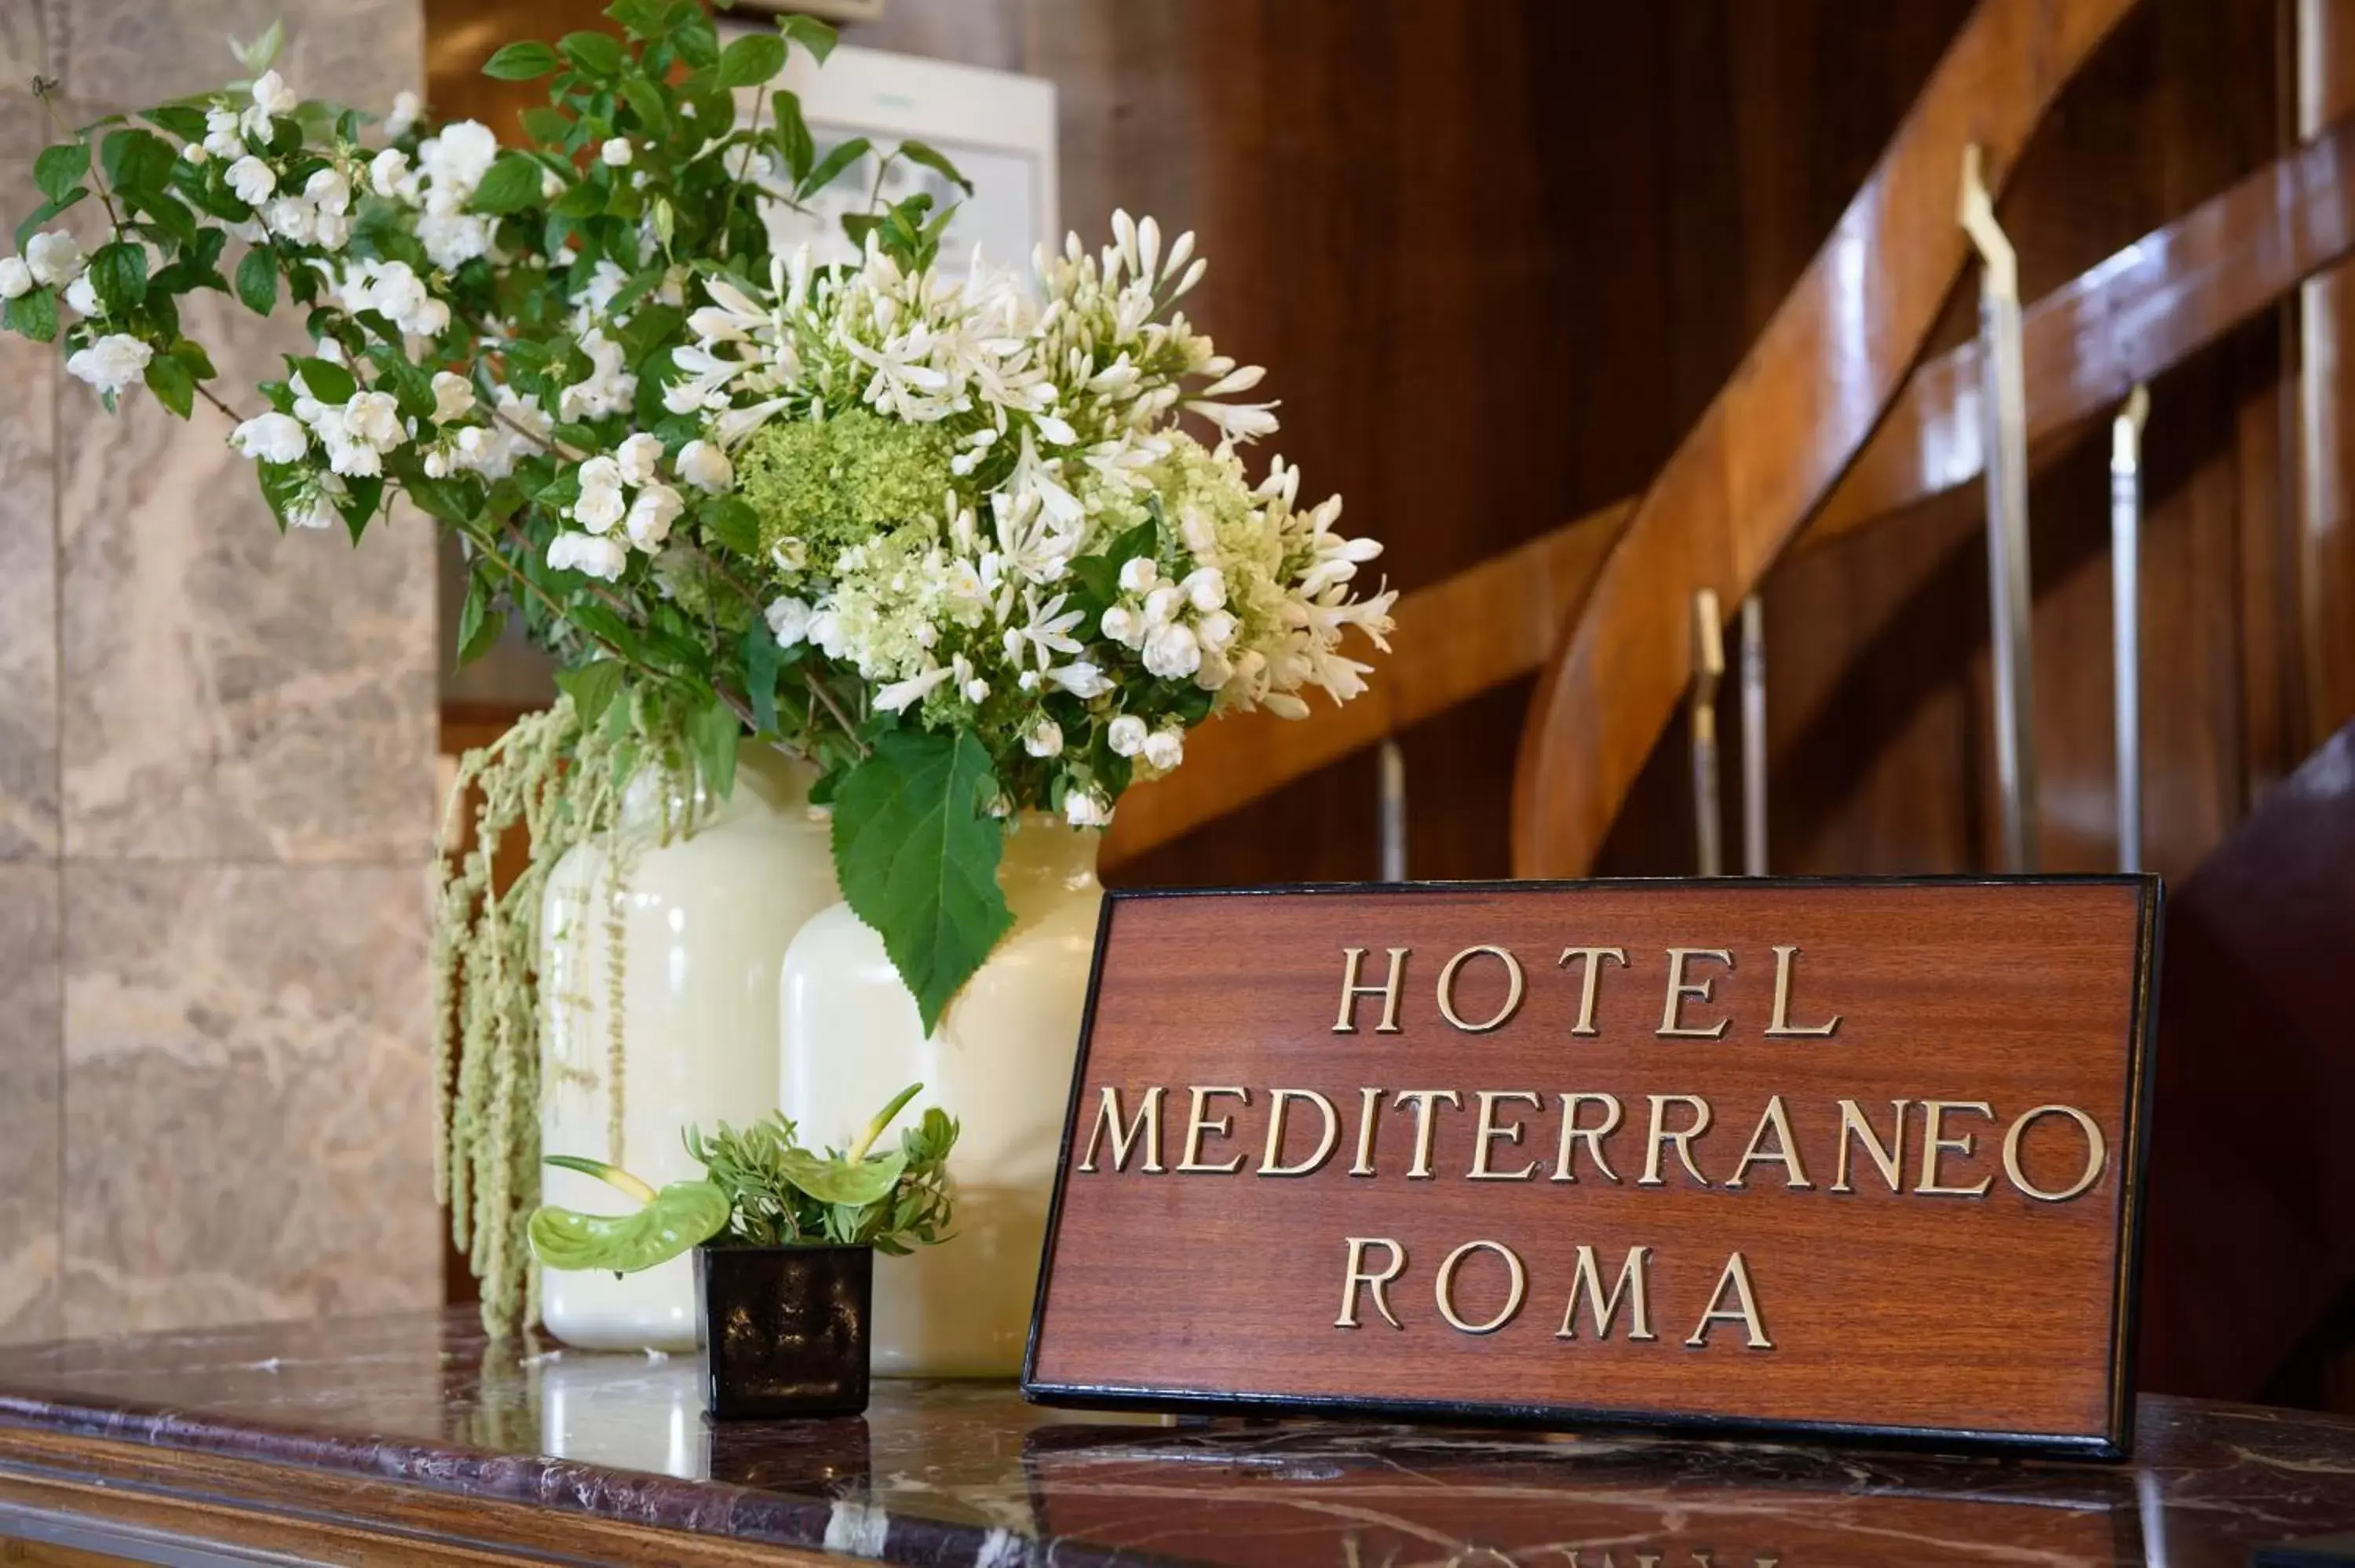 Lobby or reception in Bettoja Hotel Mediterraneo